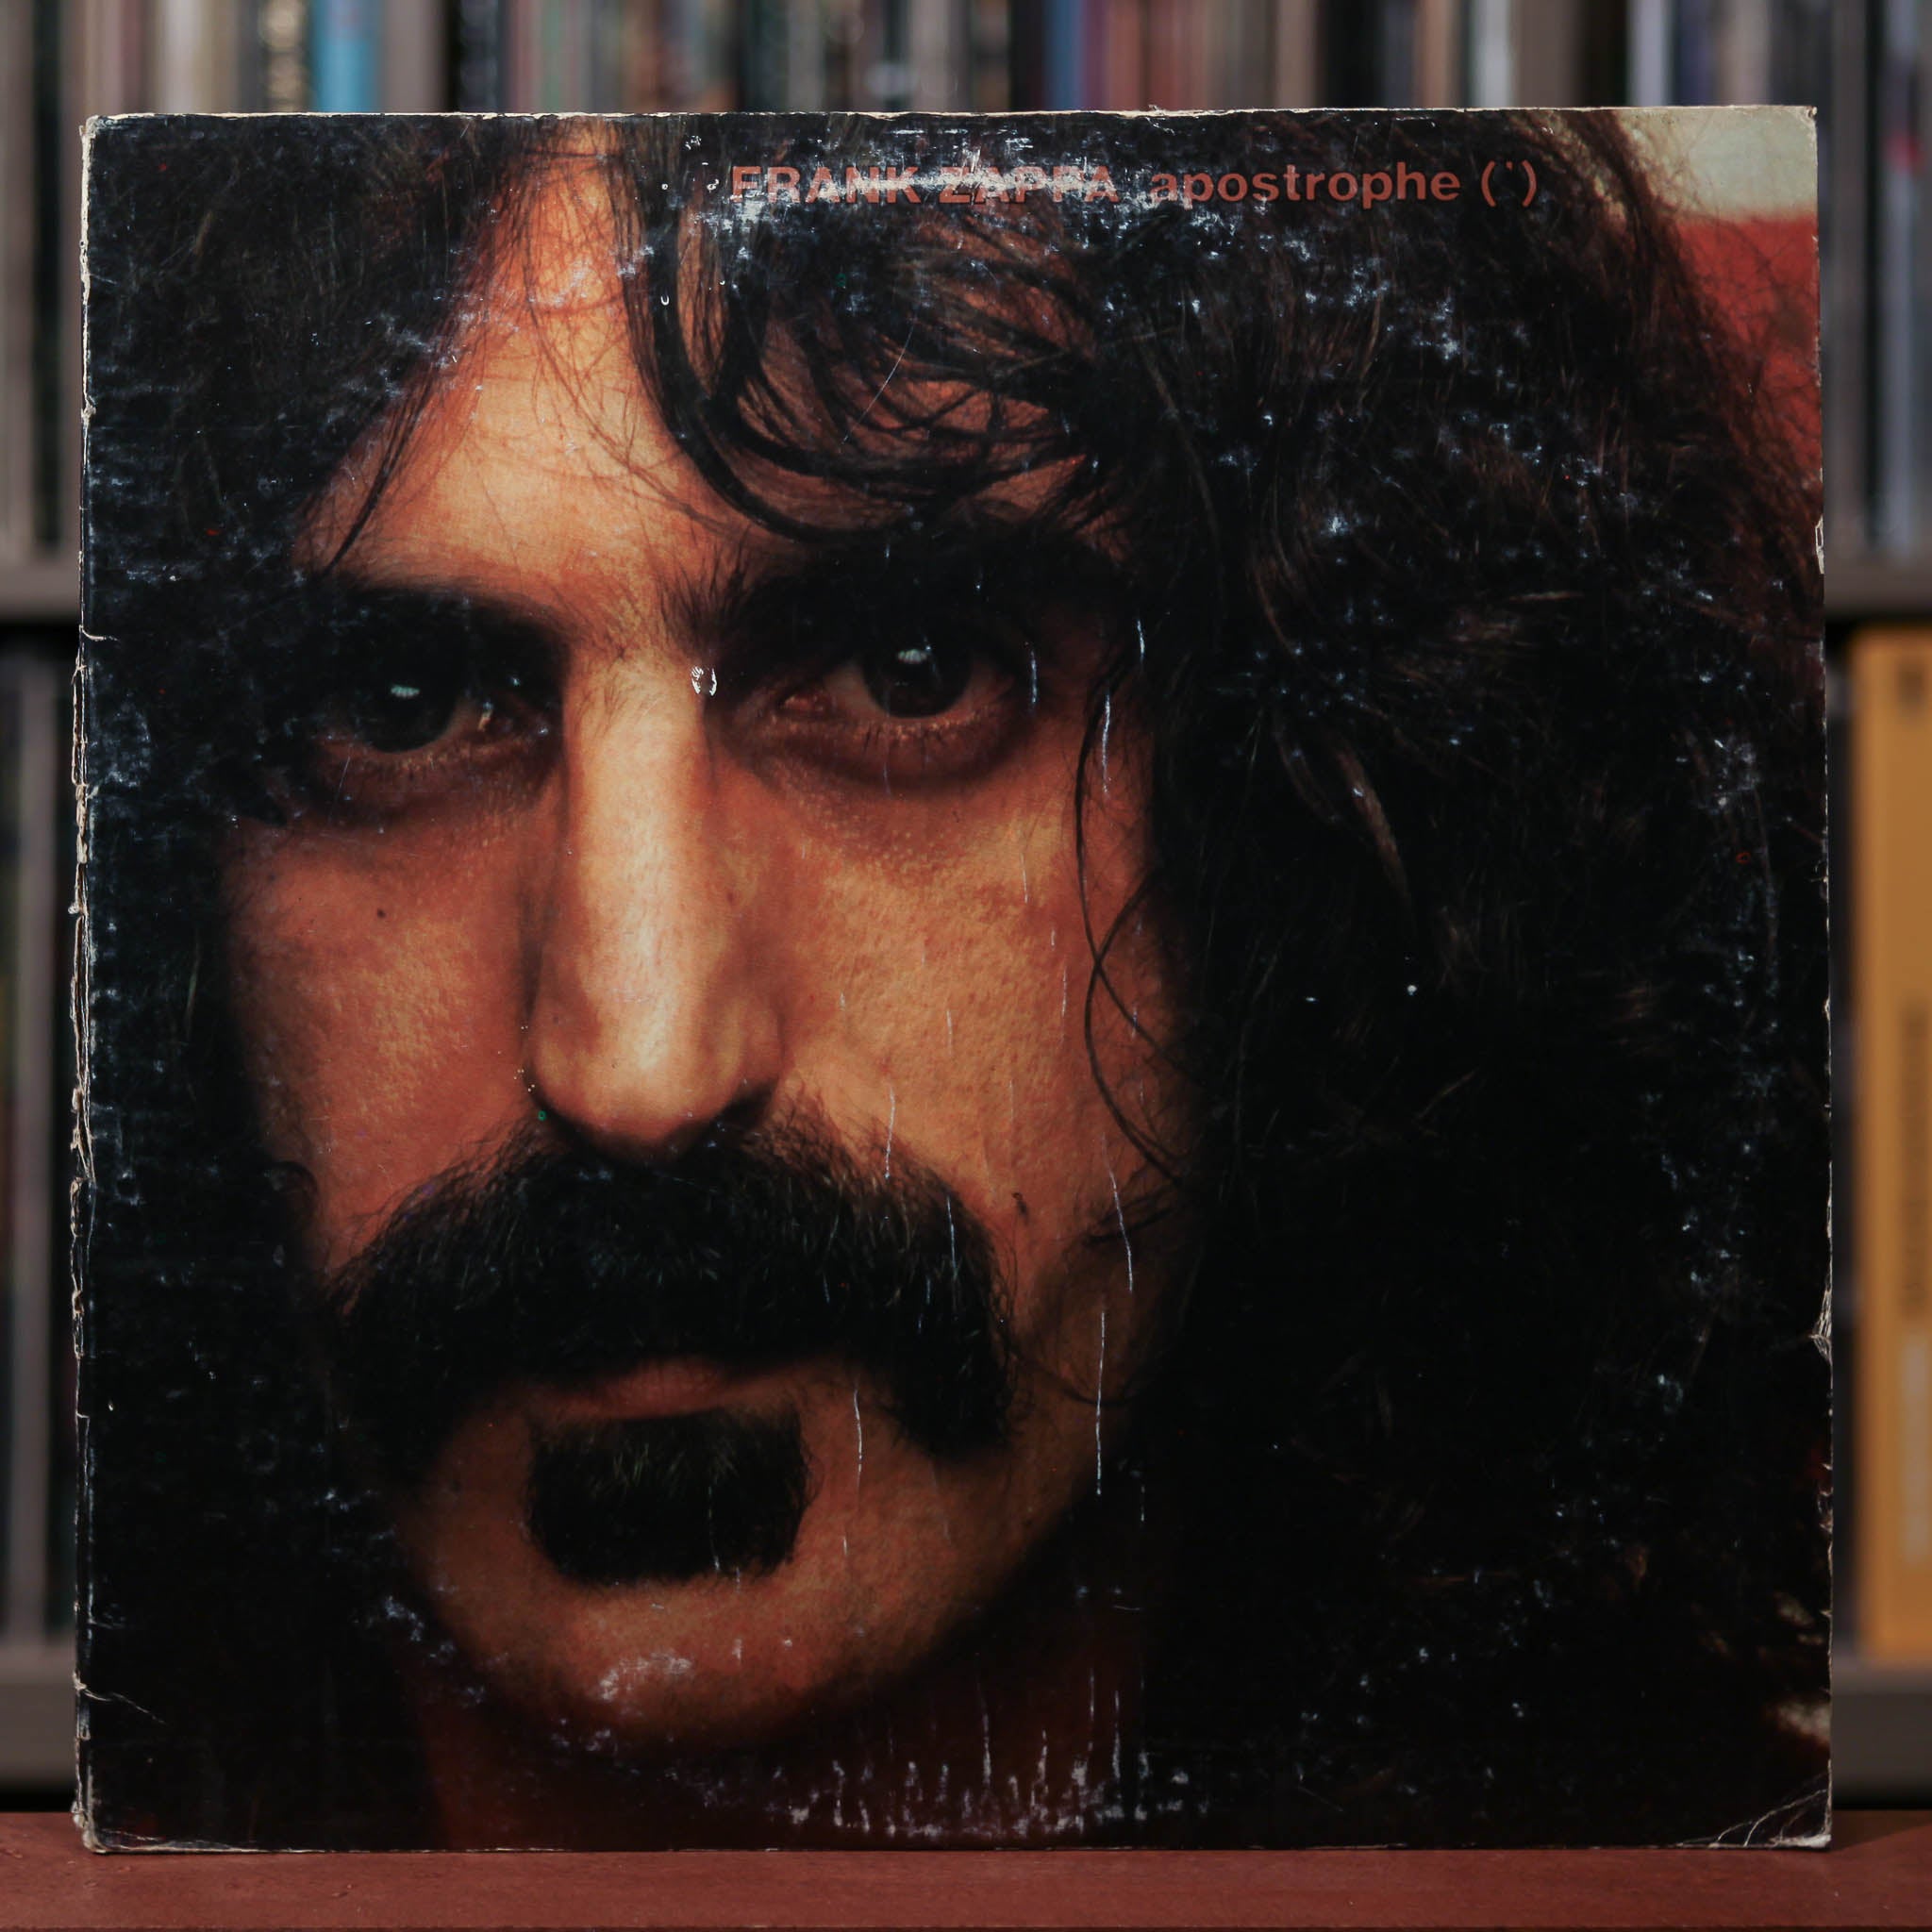 Frank Zappa - Apostrophe (') - 1974 Discreet